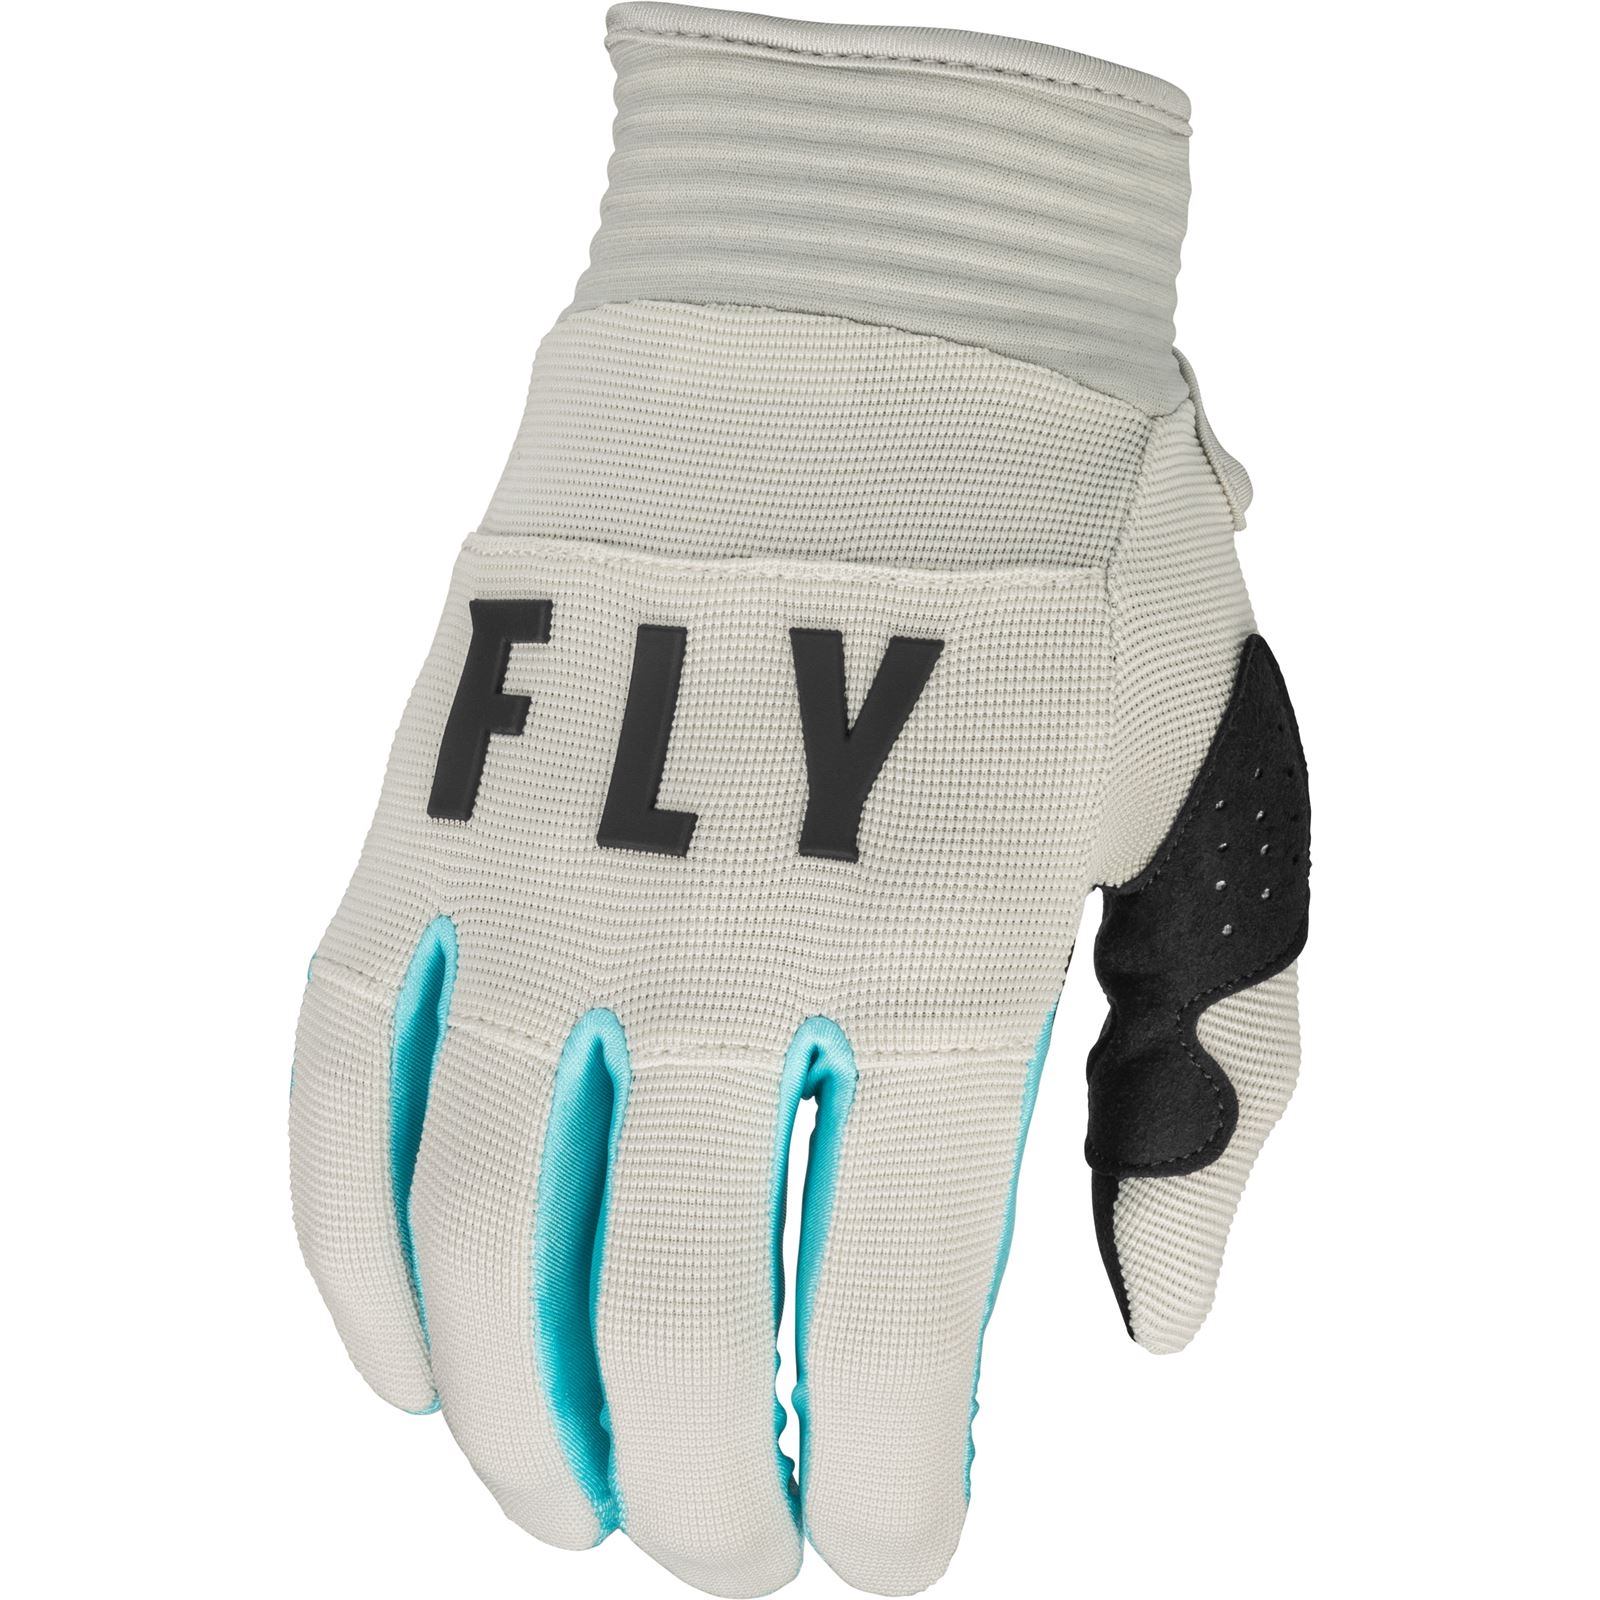 Fly Racing F-16 Gloves - Light Grey/Sky Blue - Small